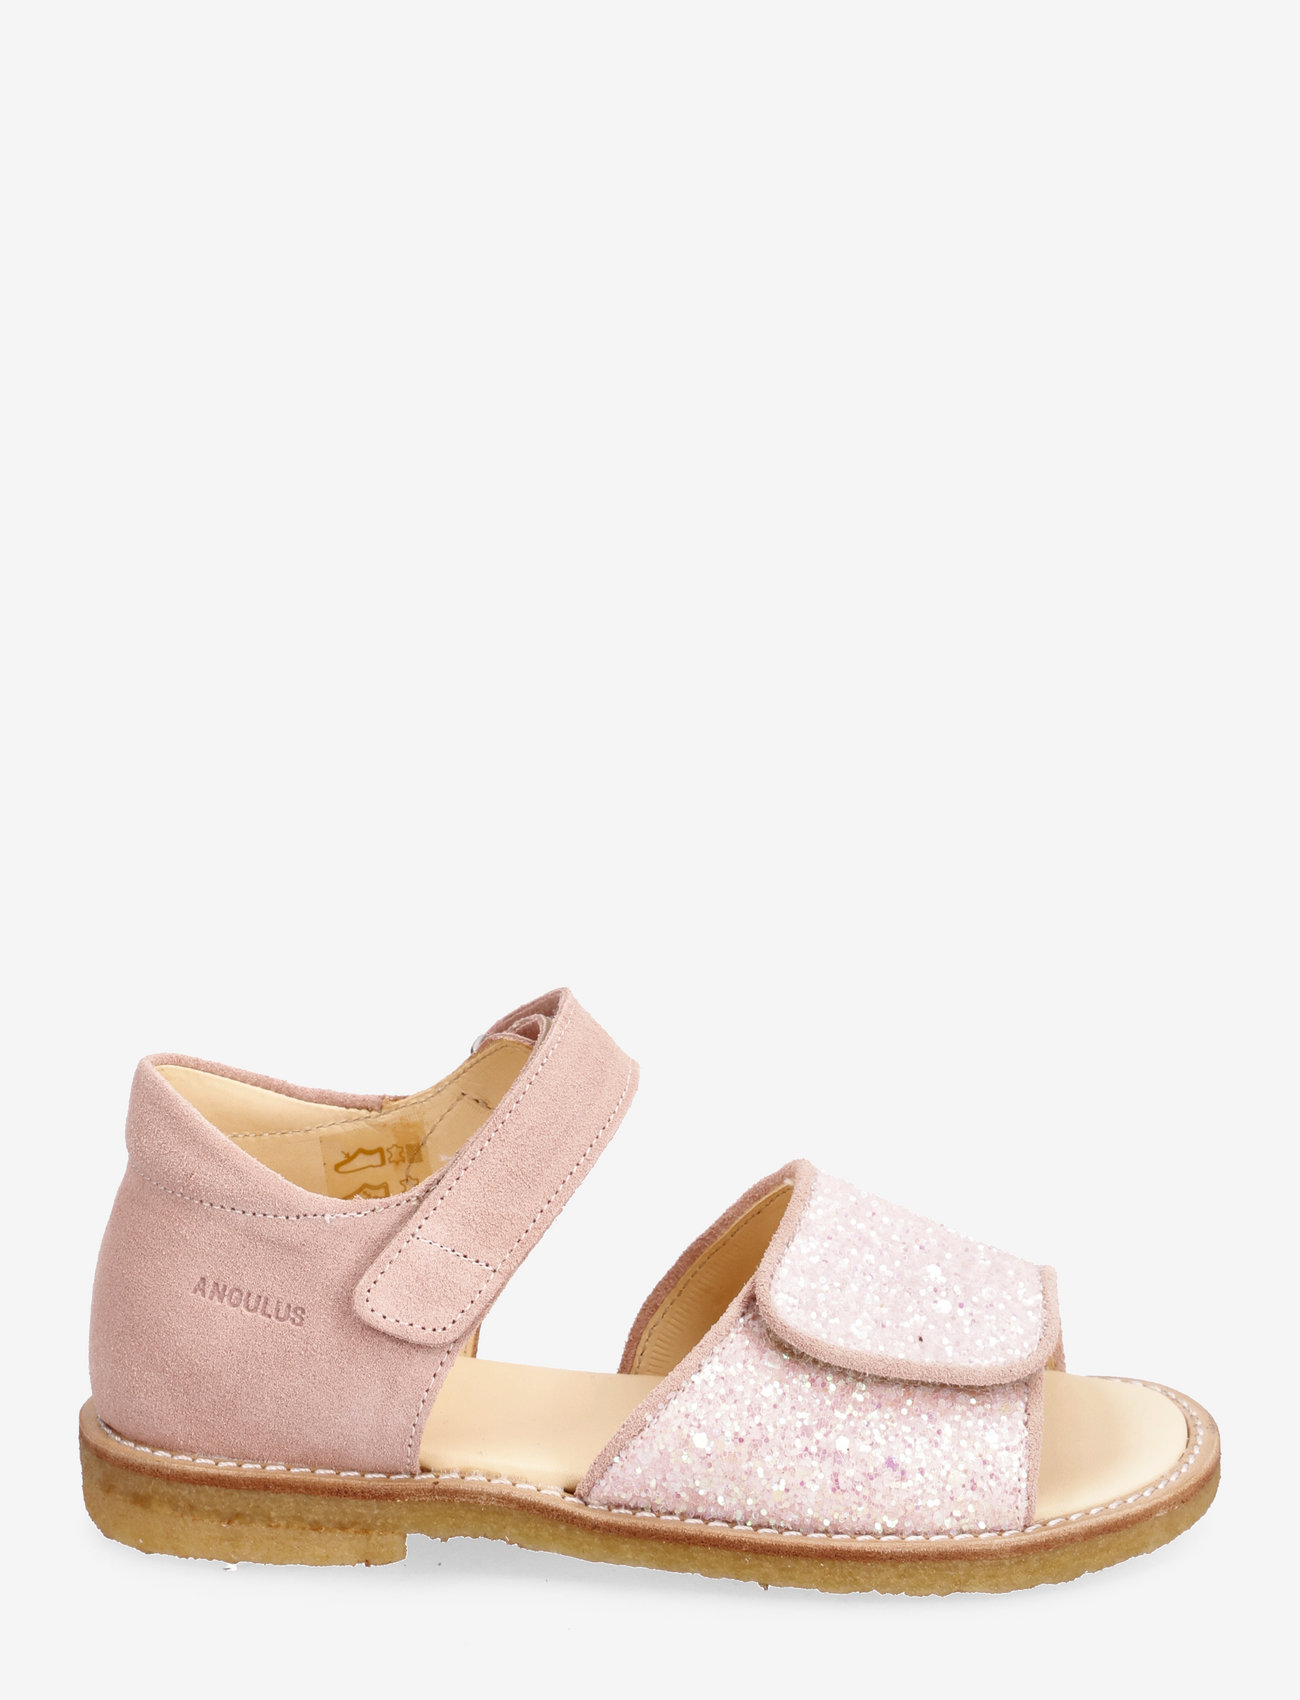 ANGULUS - Sandals - flat - open toe - clo - gode sommertilbud - 1139/2698 peach/rosa glitter - 1